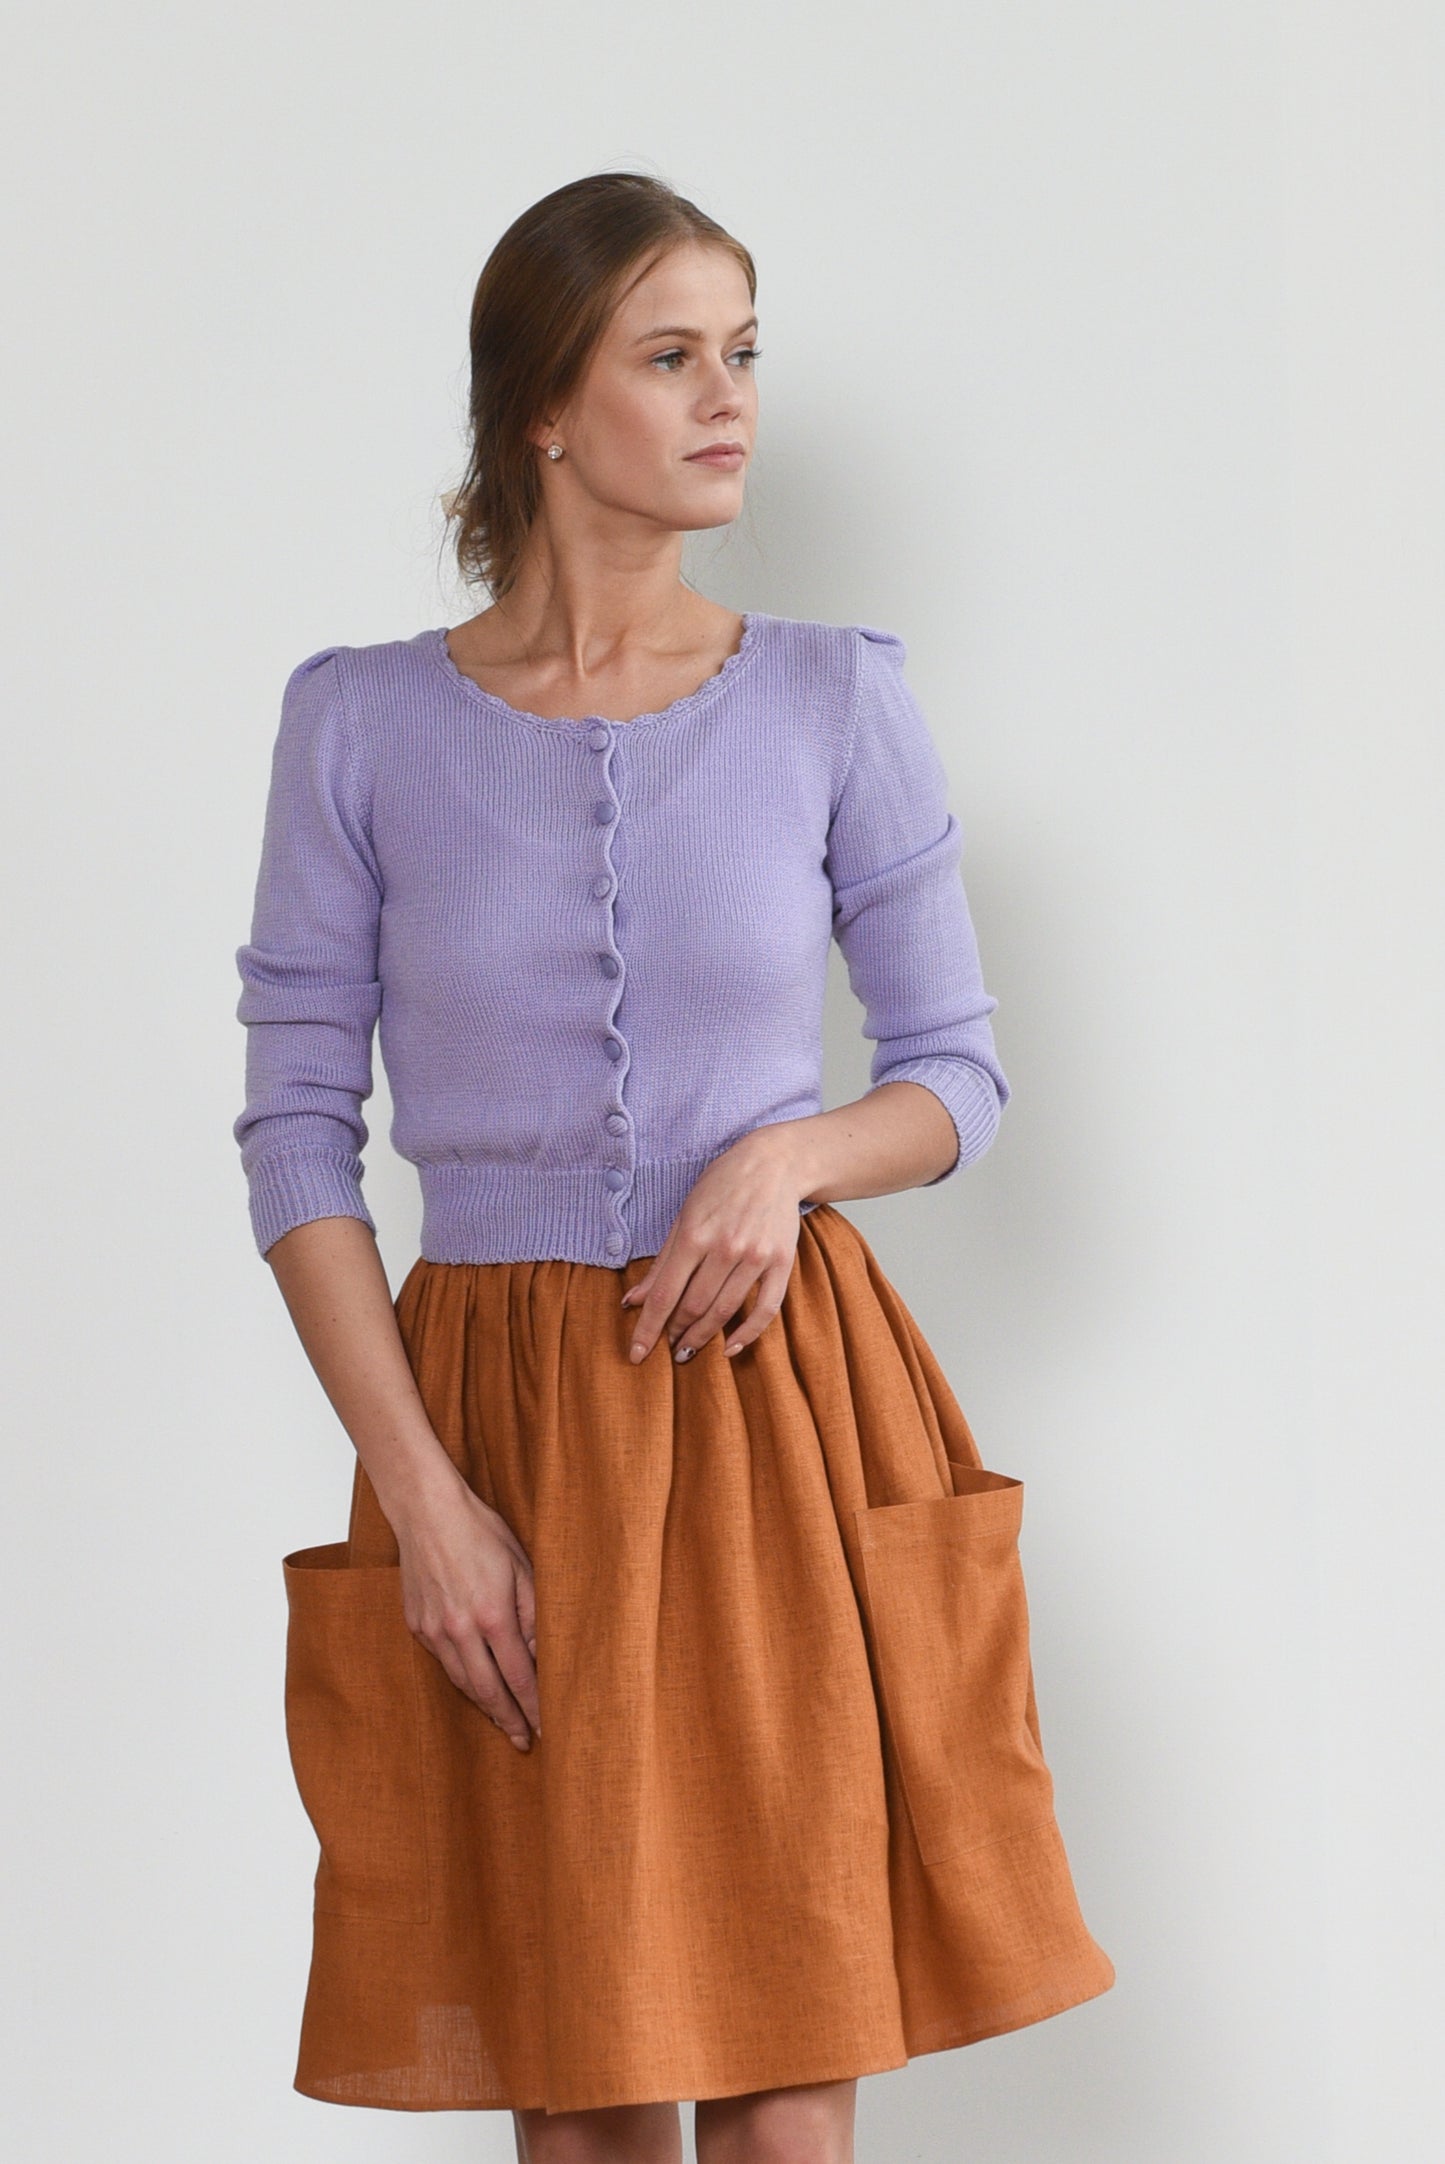 Grethel Tie-Wrap Linen Skirt with Pockets in Orange/Rust